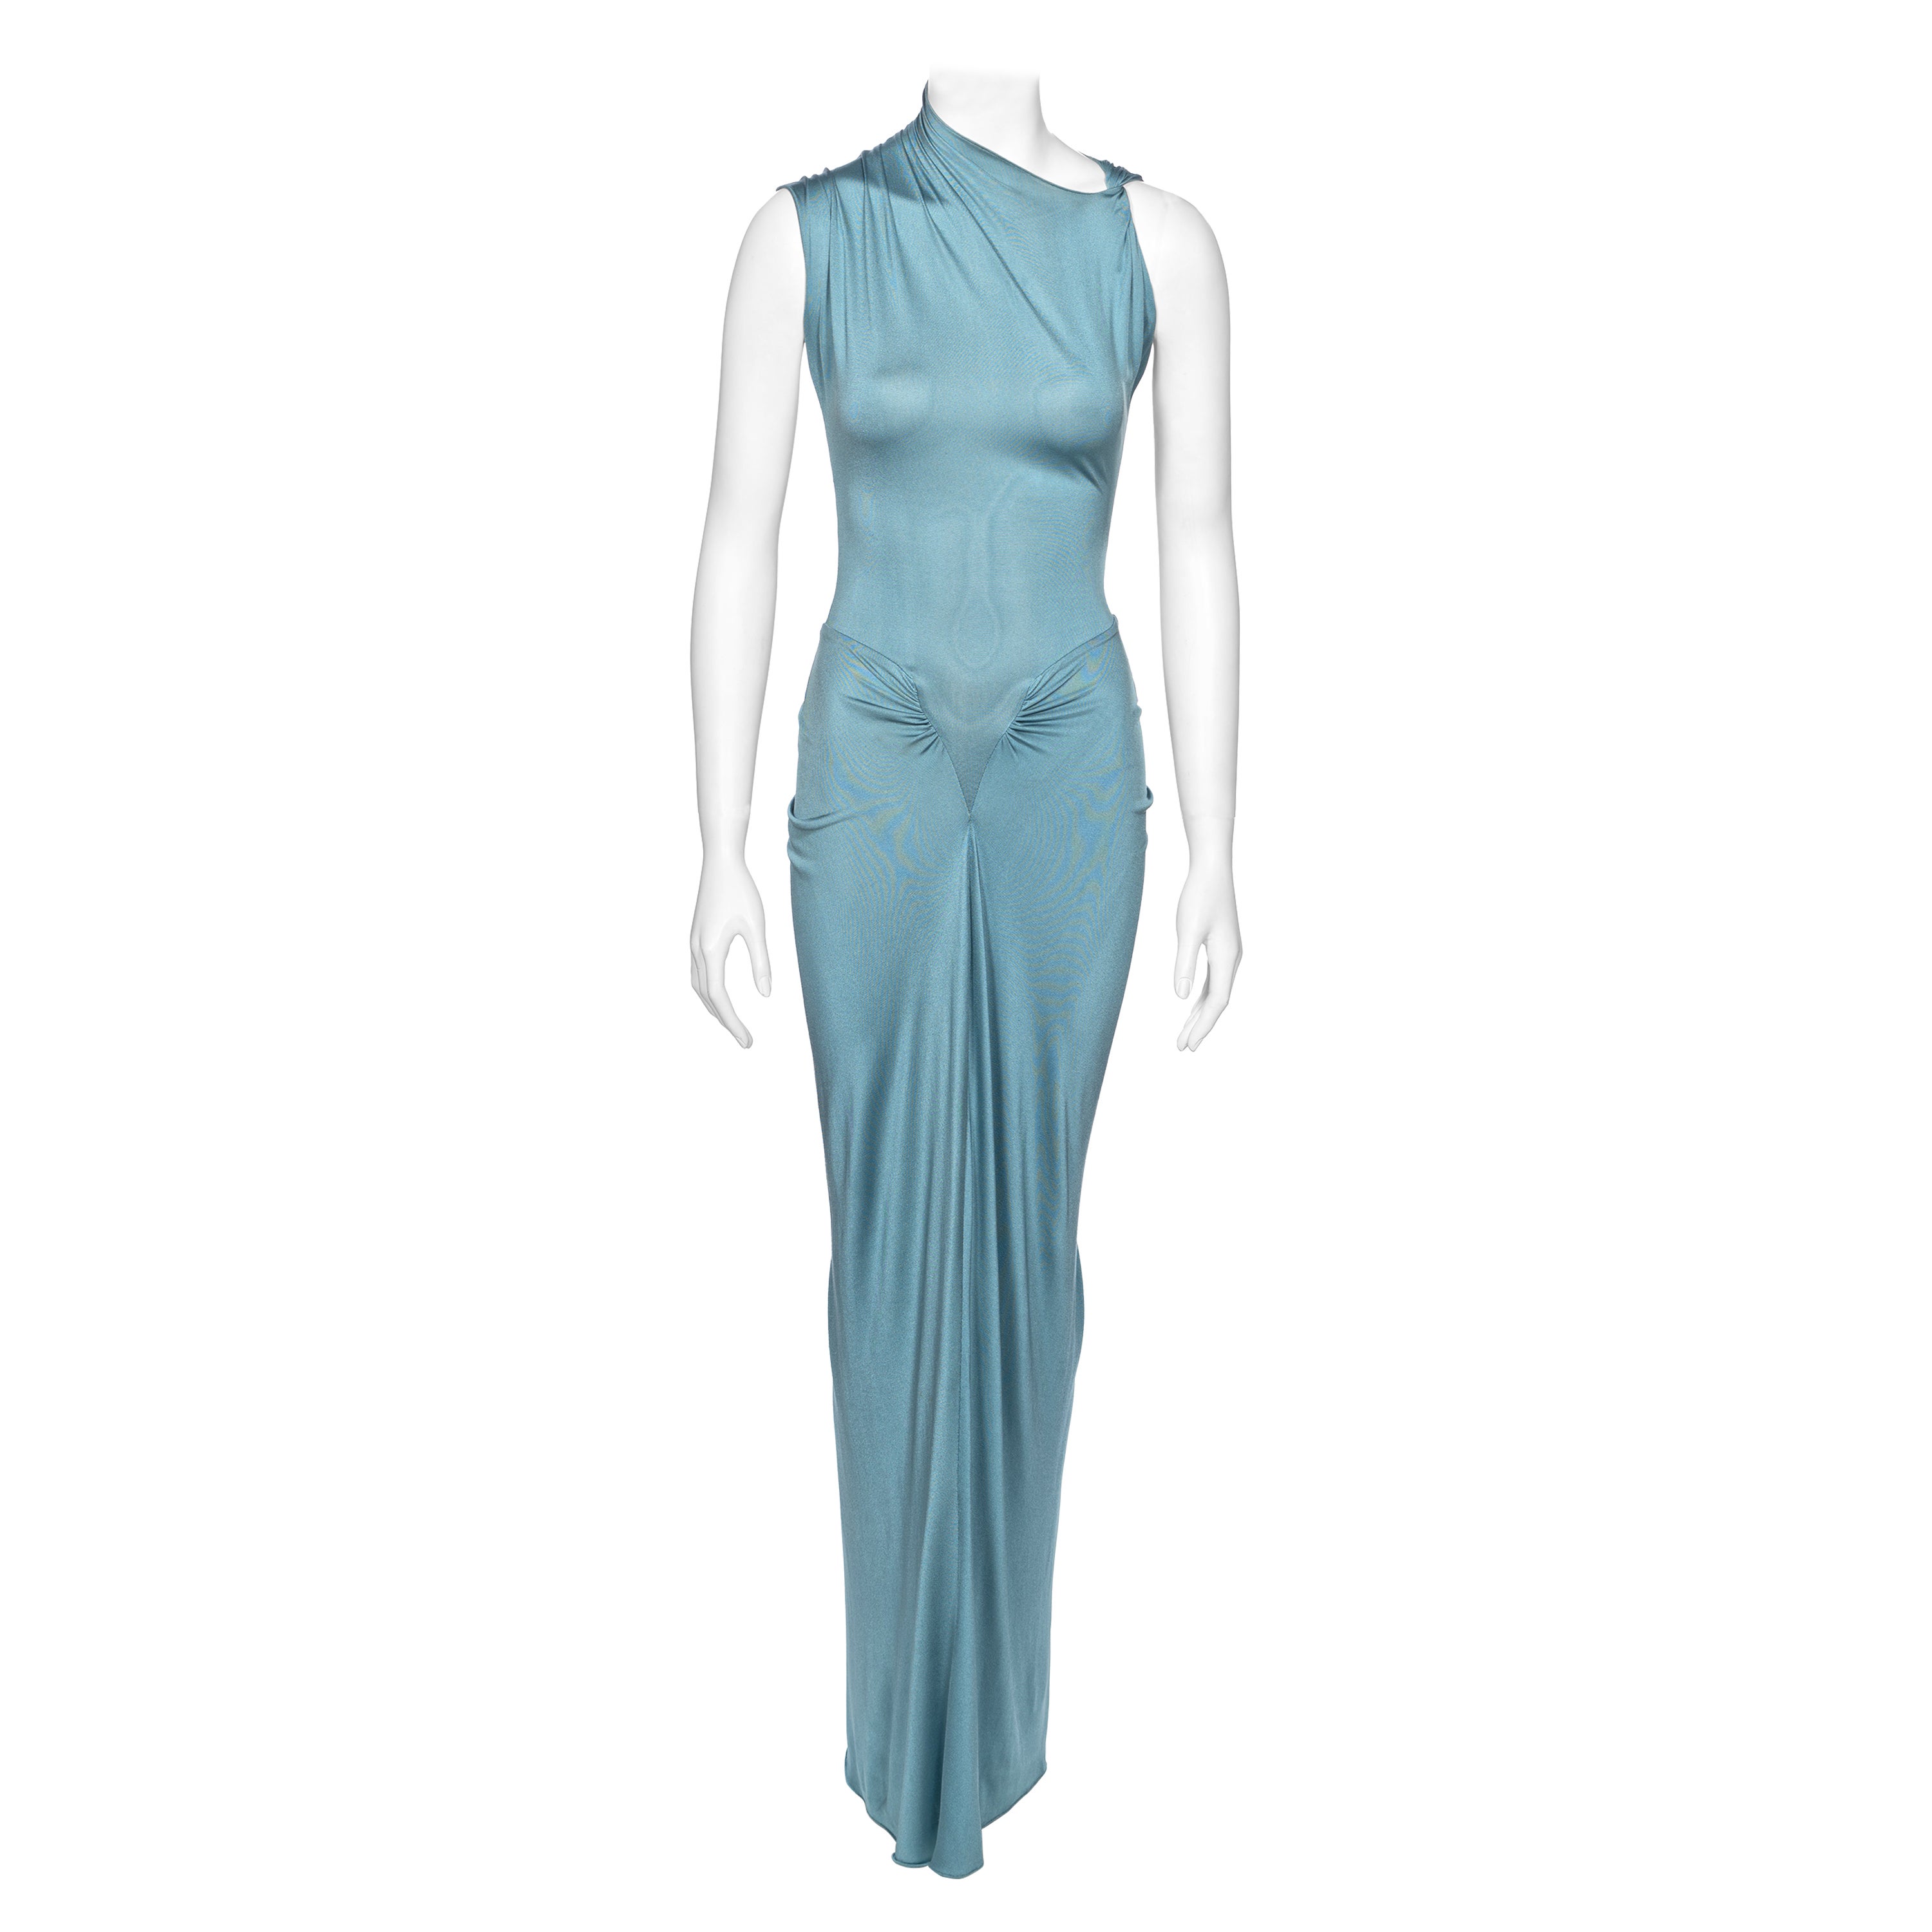 Christian Dior by John Galliano Powder Blue Silk Jersey Evening Dress, ss 2000 For Sale